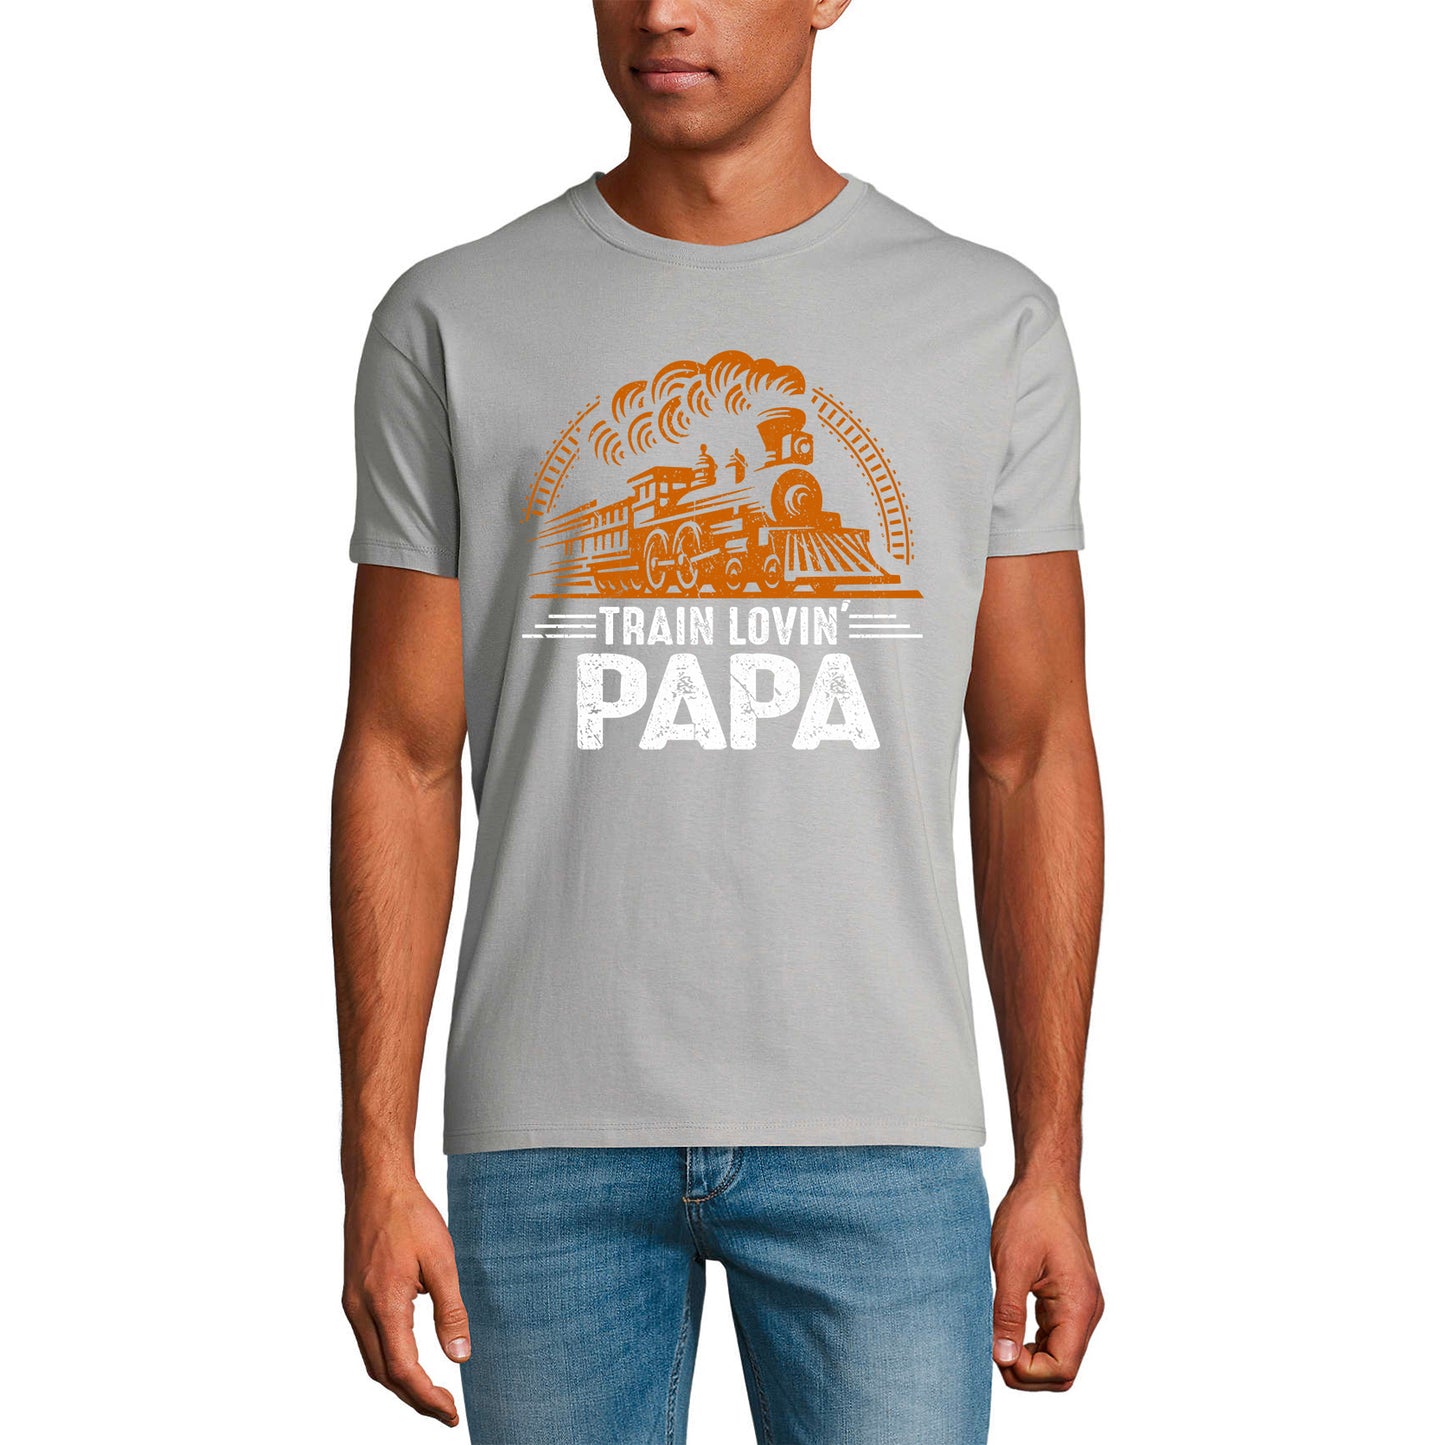 ULTRABASIC Men's Graphic T-Shirt Train Lovin' Papa - Vintage Shirt - Father's Day